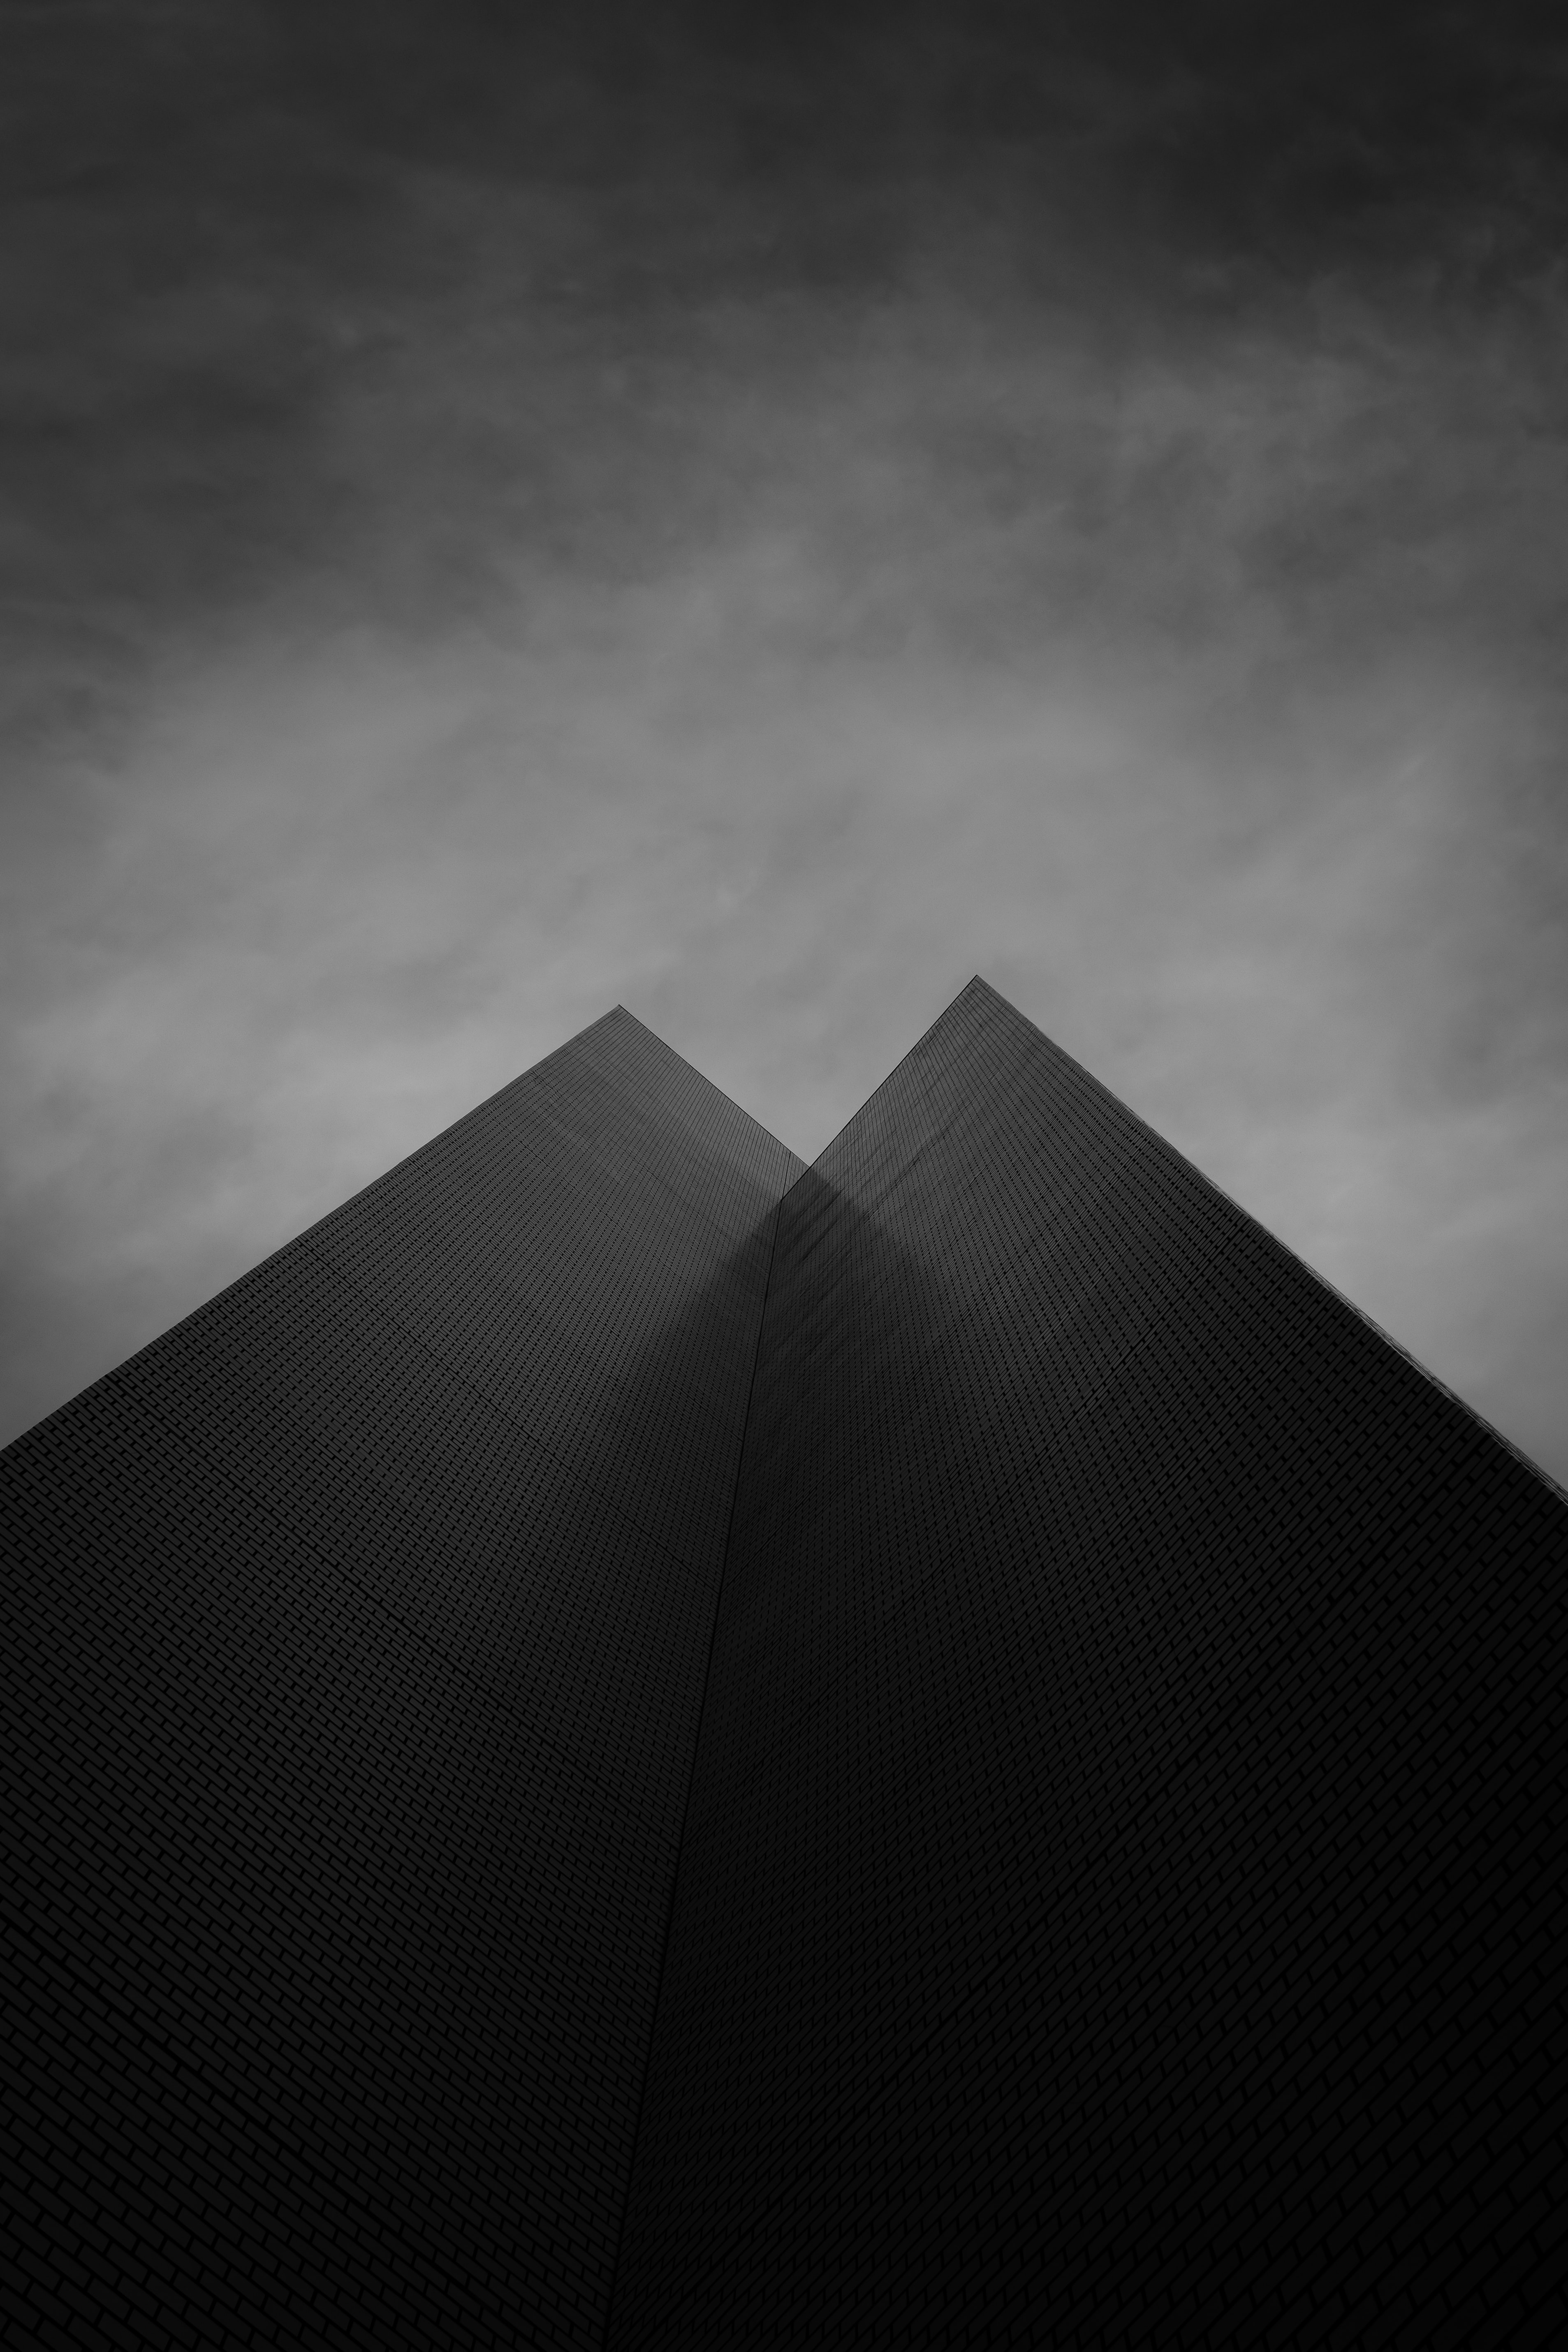 bottom view, bw, chb, building, sky, facade, black